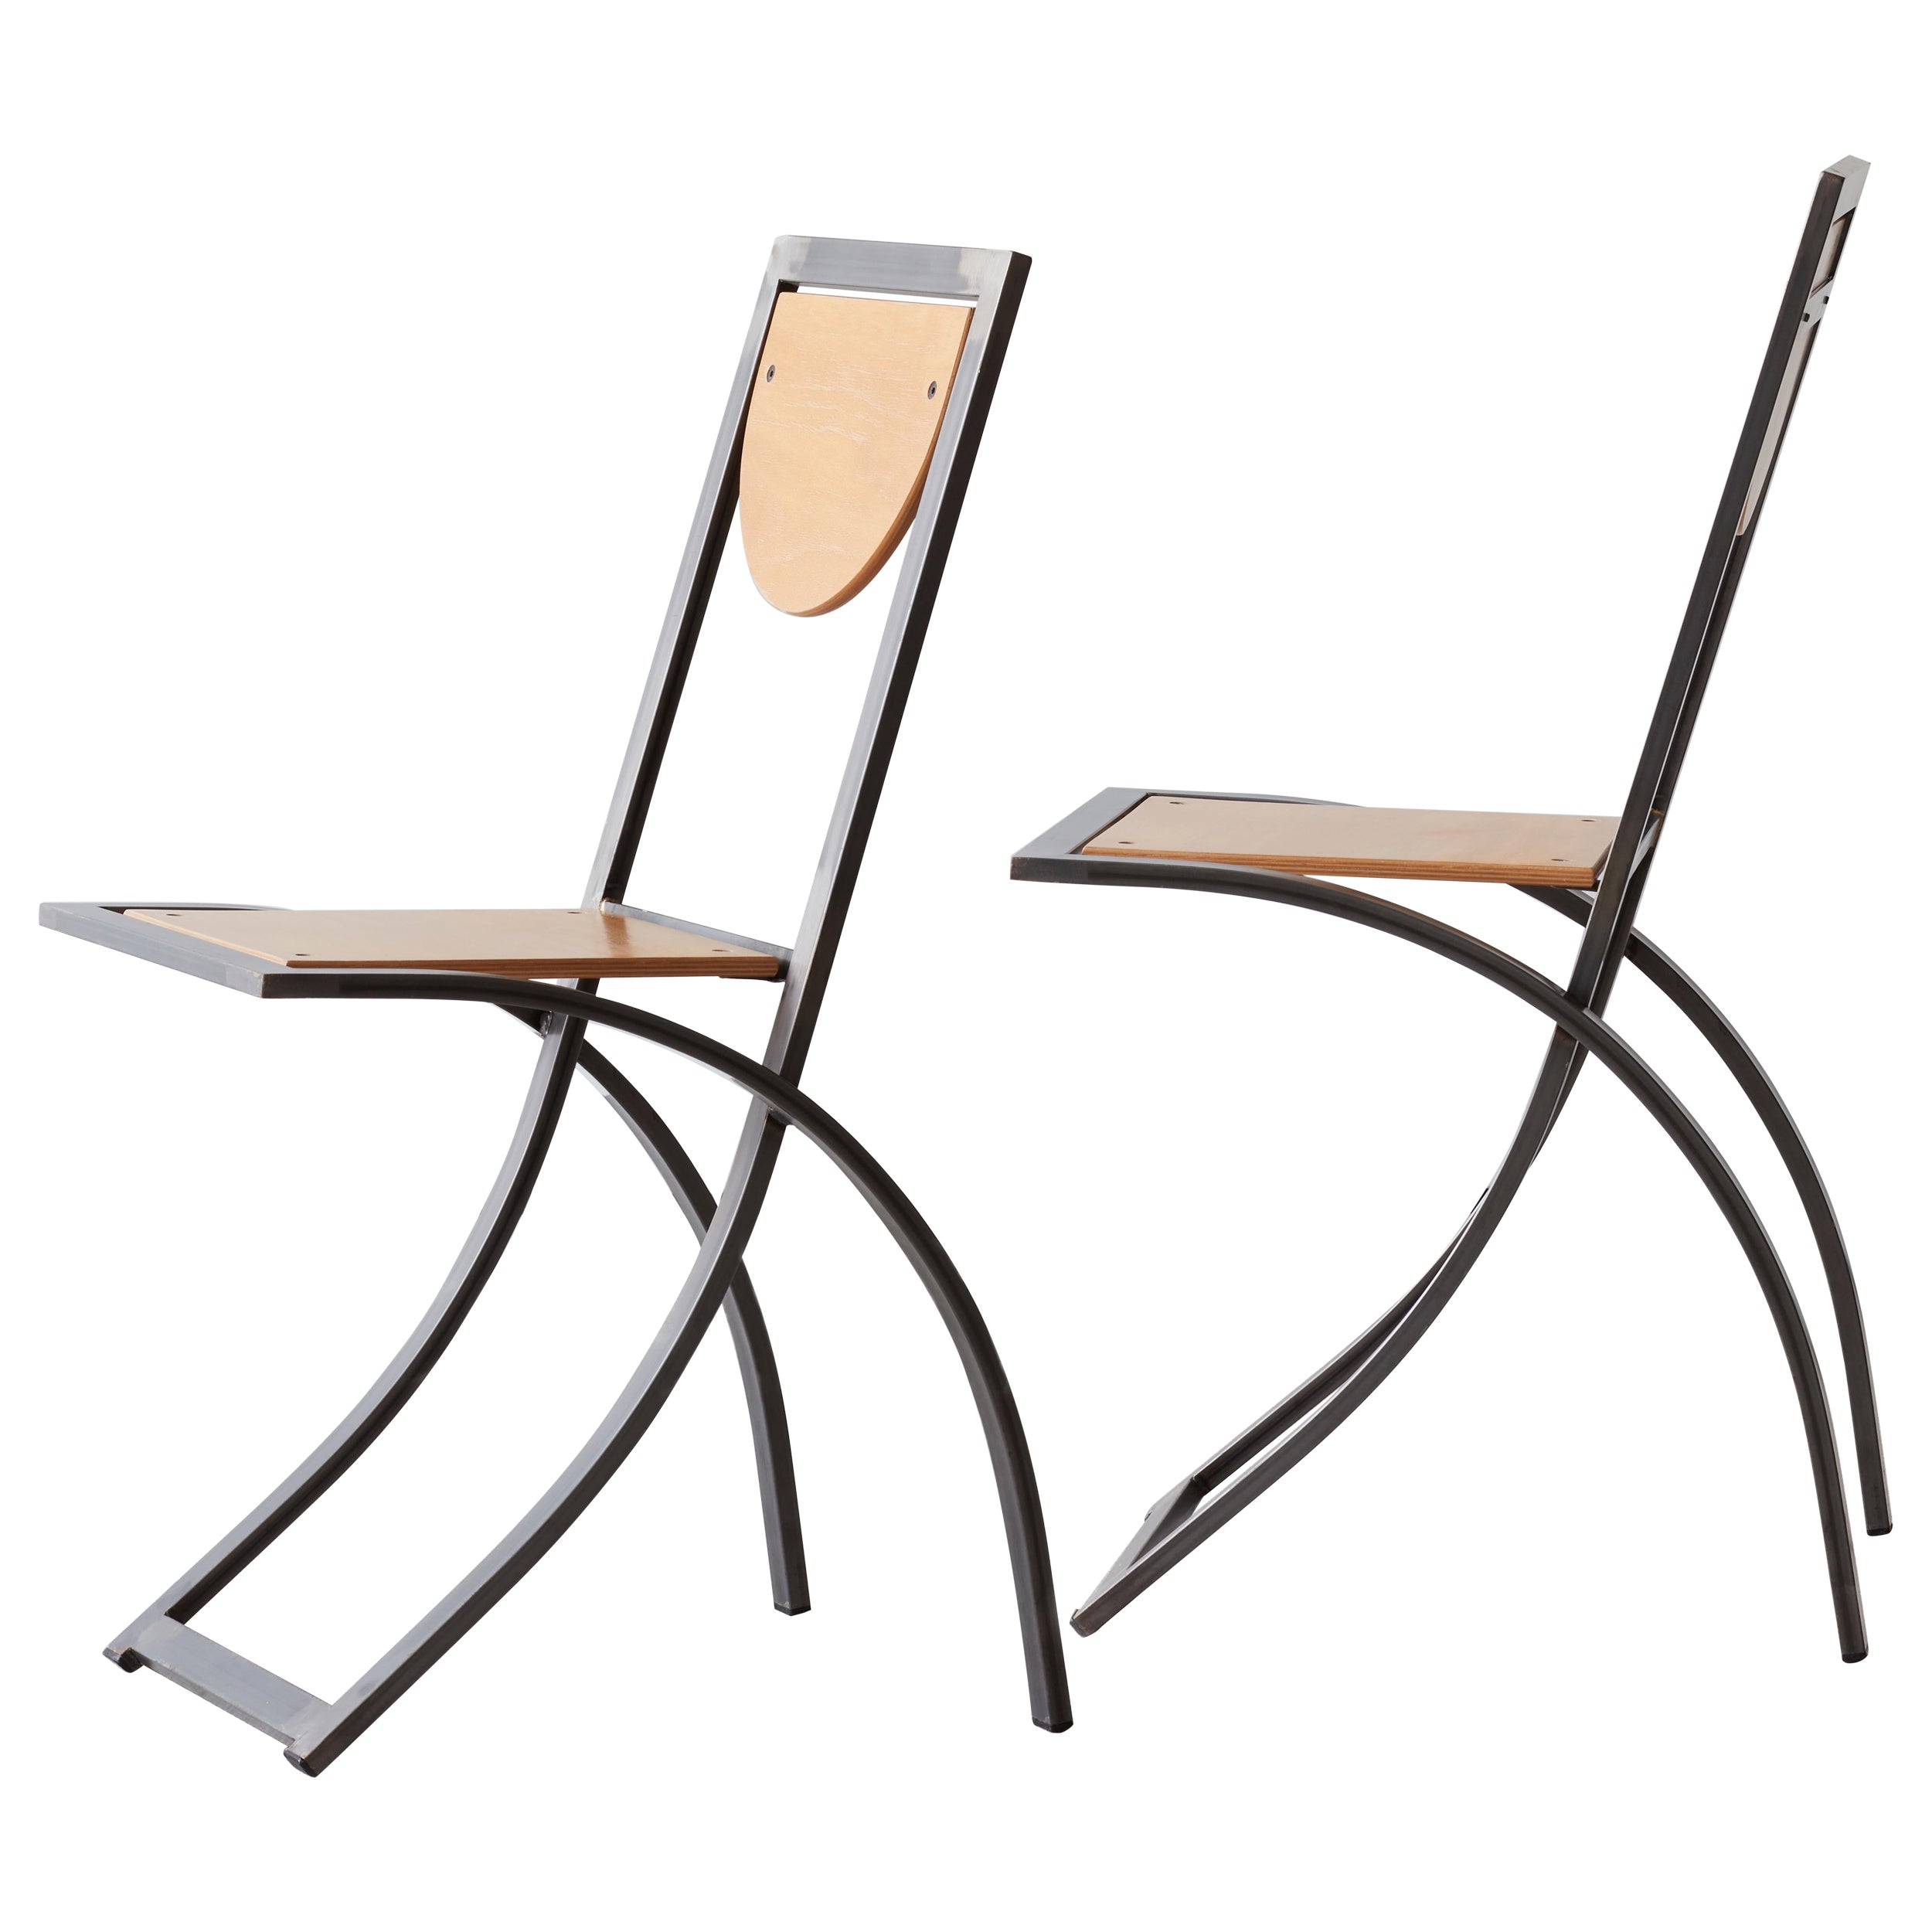 Sinus chairs by Karl Friedrich Förster For Sale